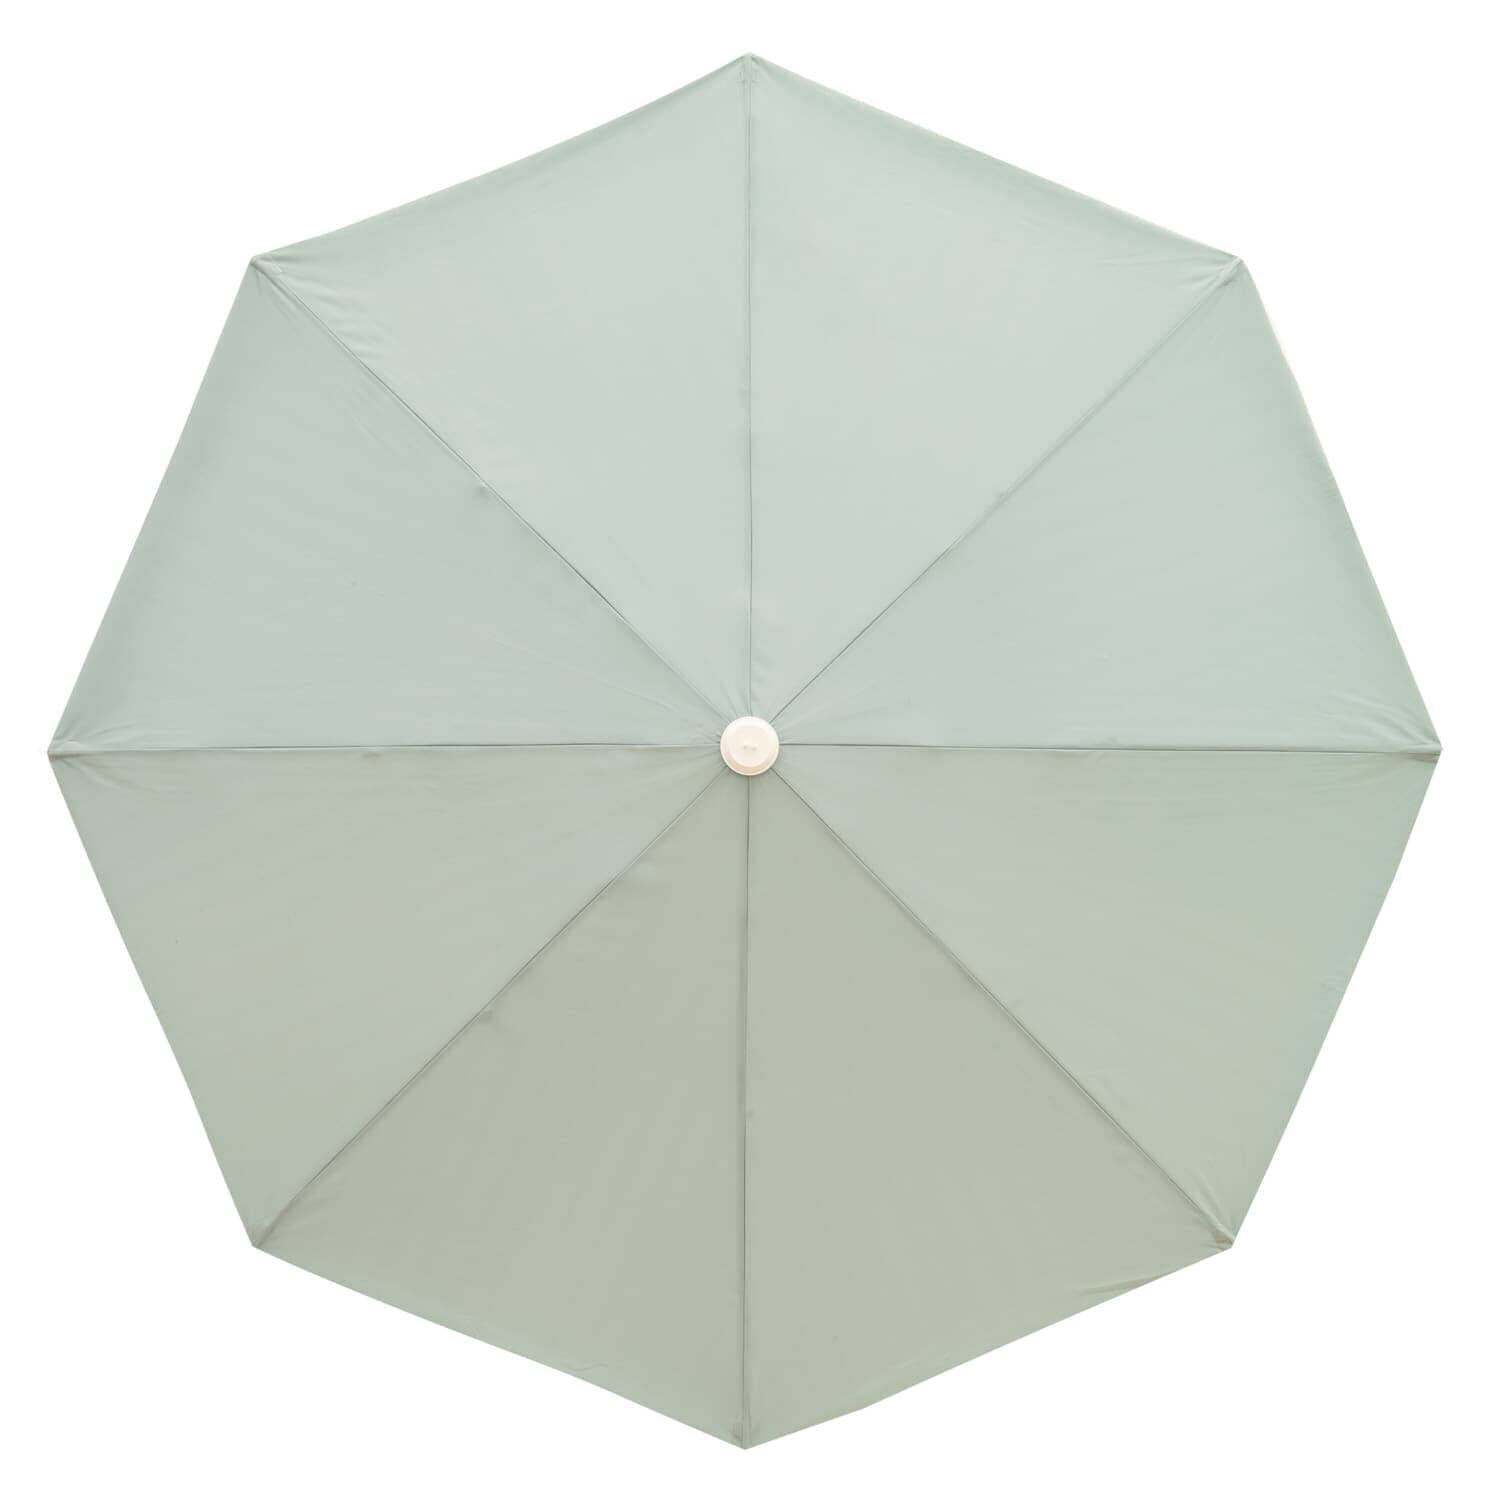 Studio image of Amalfi Umbrella in Riviera Green